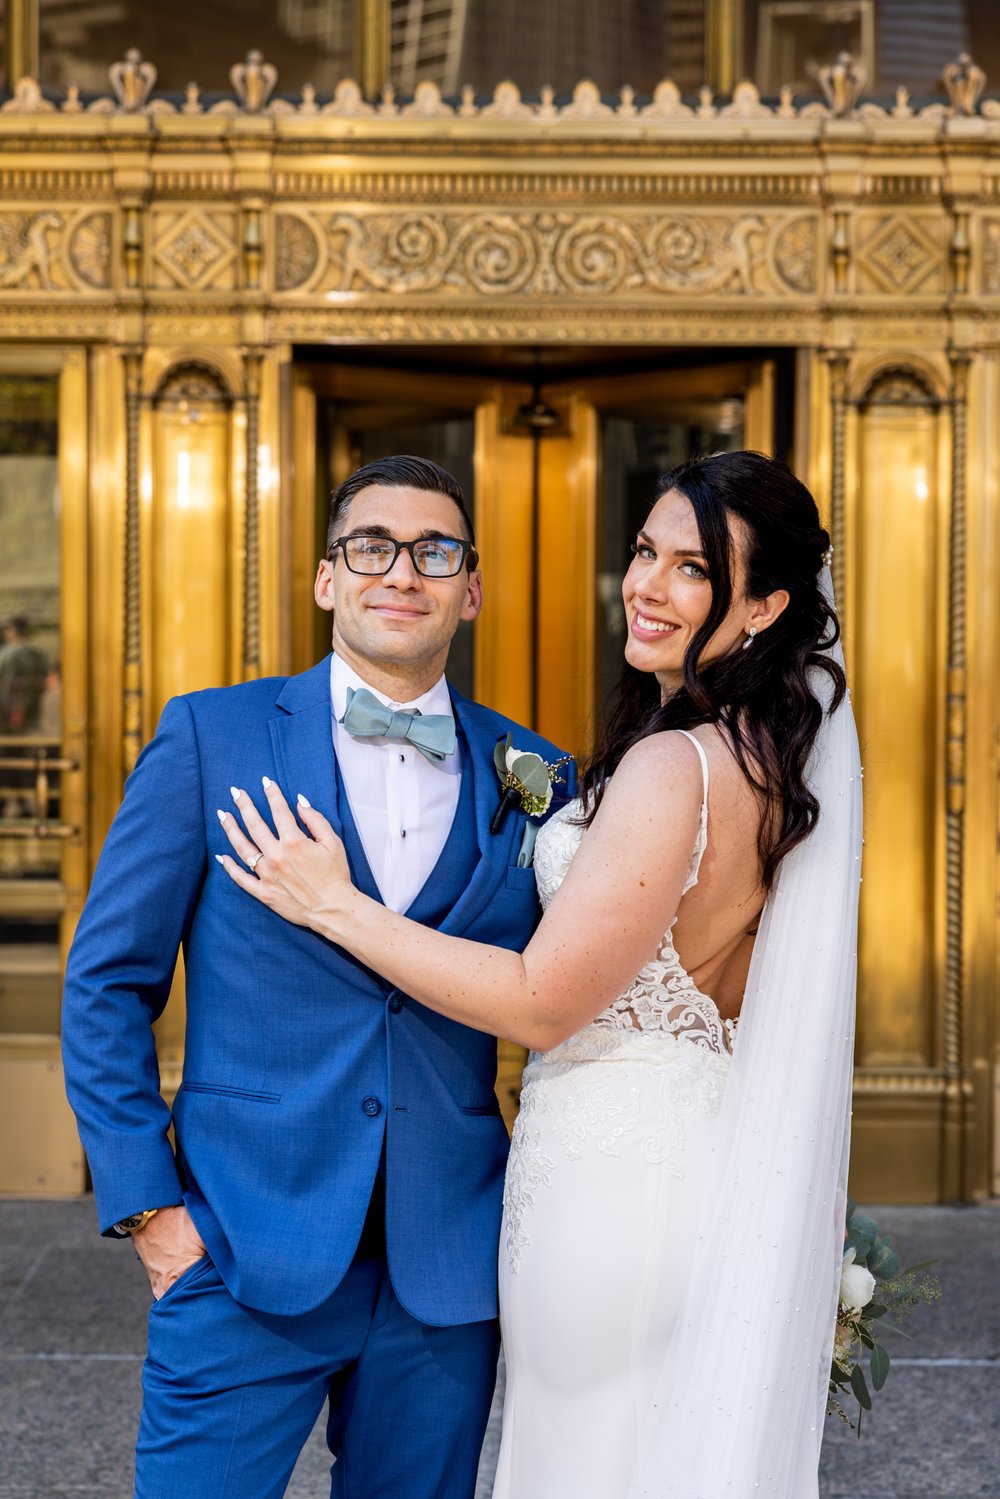 Alex Maldonado Photography | Chicago Wedding Photographer | popular wedding portrait locations.jpg